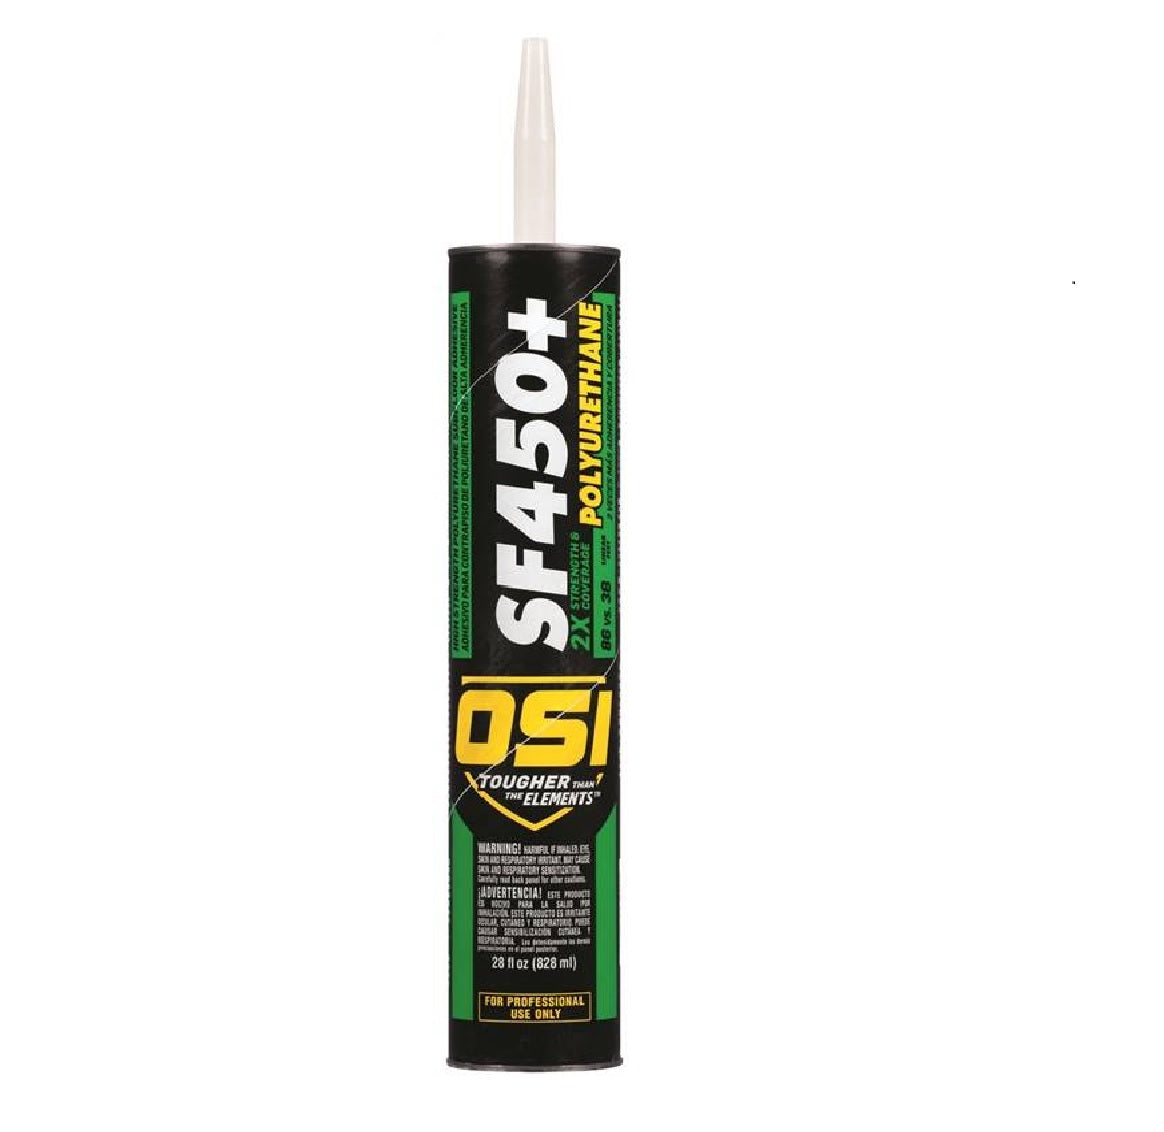 Osi 2569440 Subfloor Adhesive, 28 fl-oz Cartridge